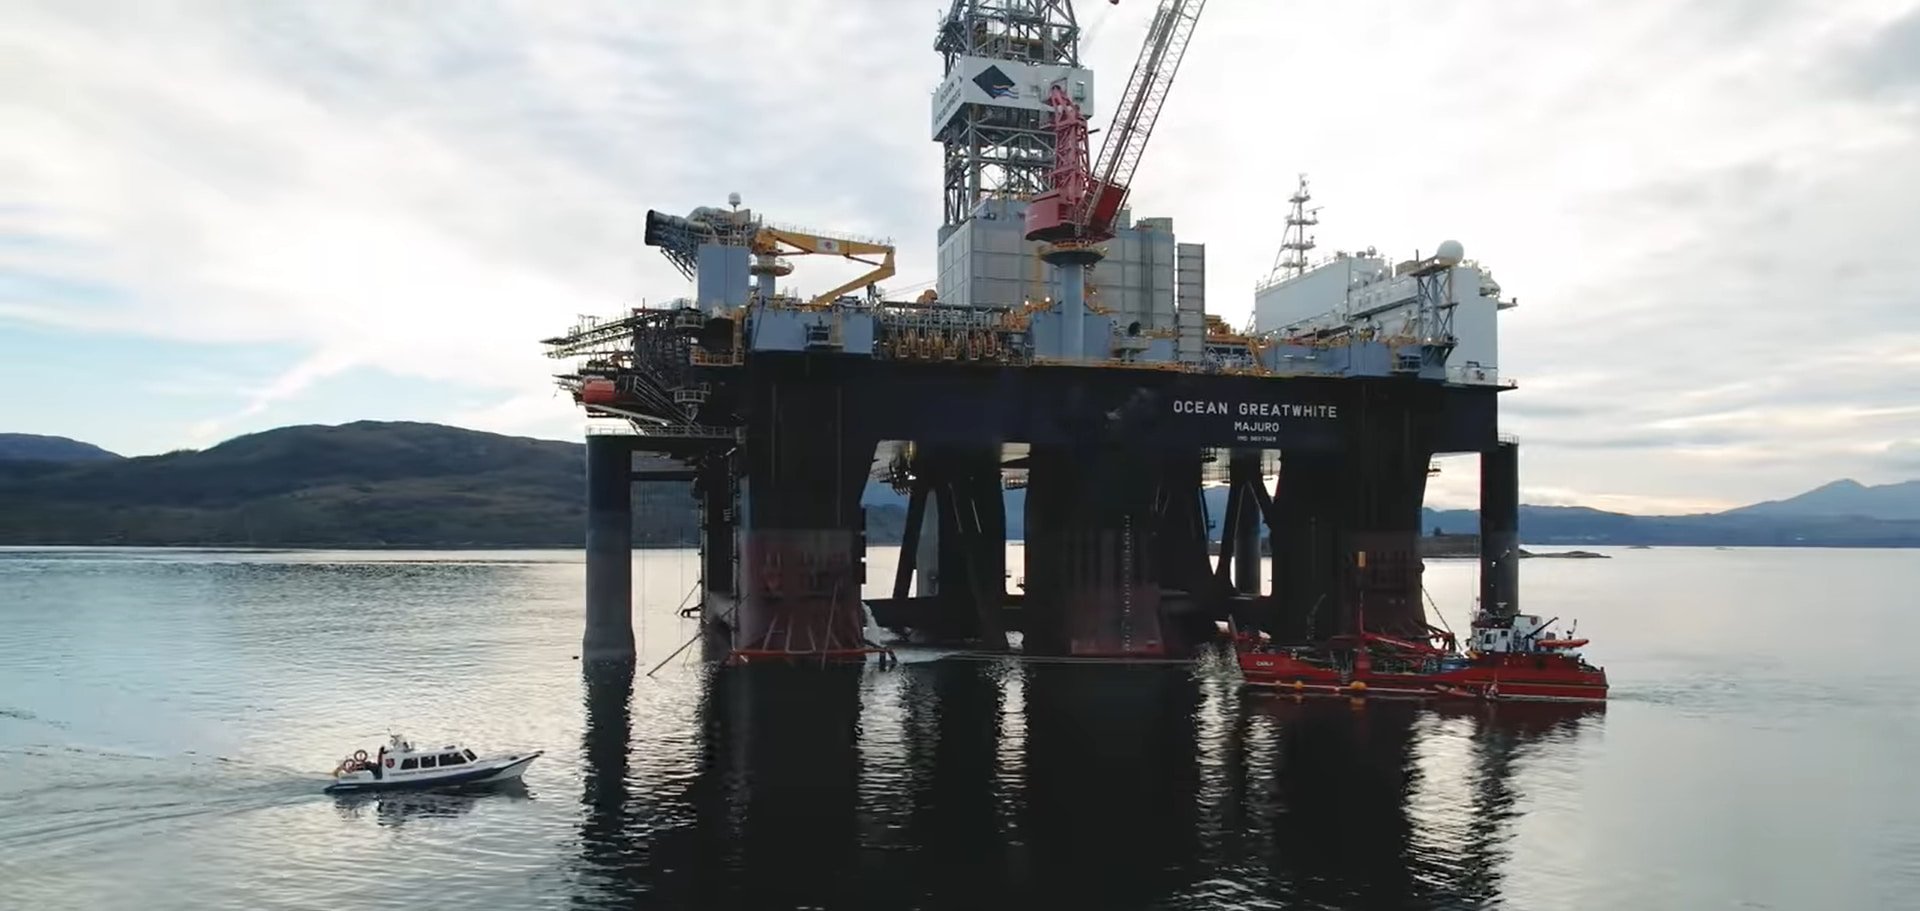 Diamond Offshore’s Ocean GreatWhite rig; Source: Ferguson Transport & Shipping (video)